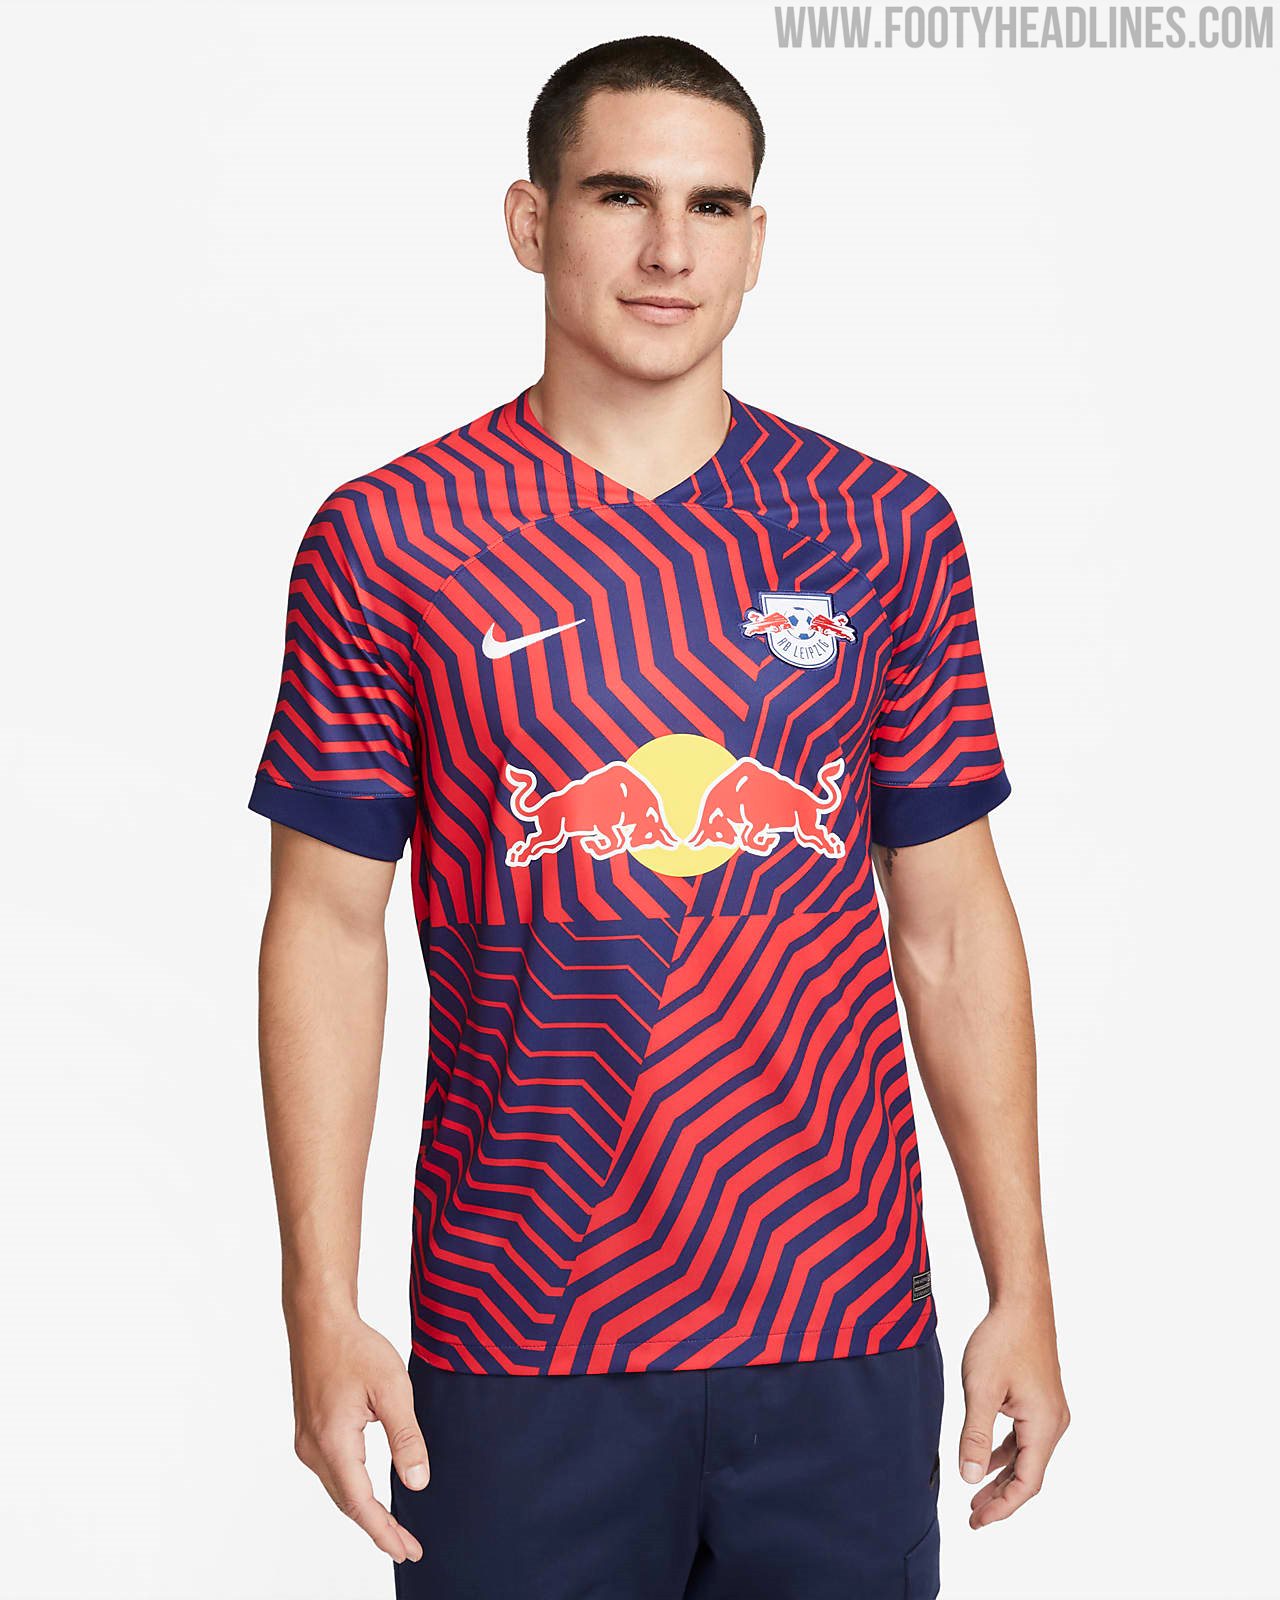 Red Bull Leipzig Jerseys & Teamwear, Bundesliga Merch